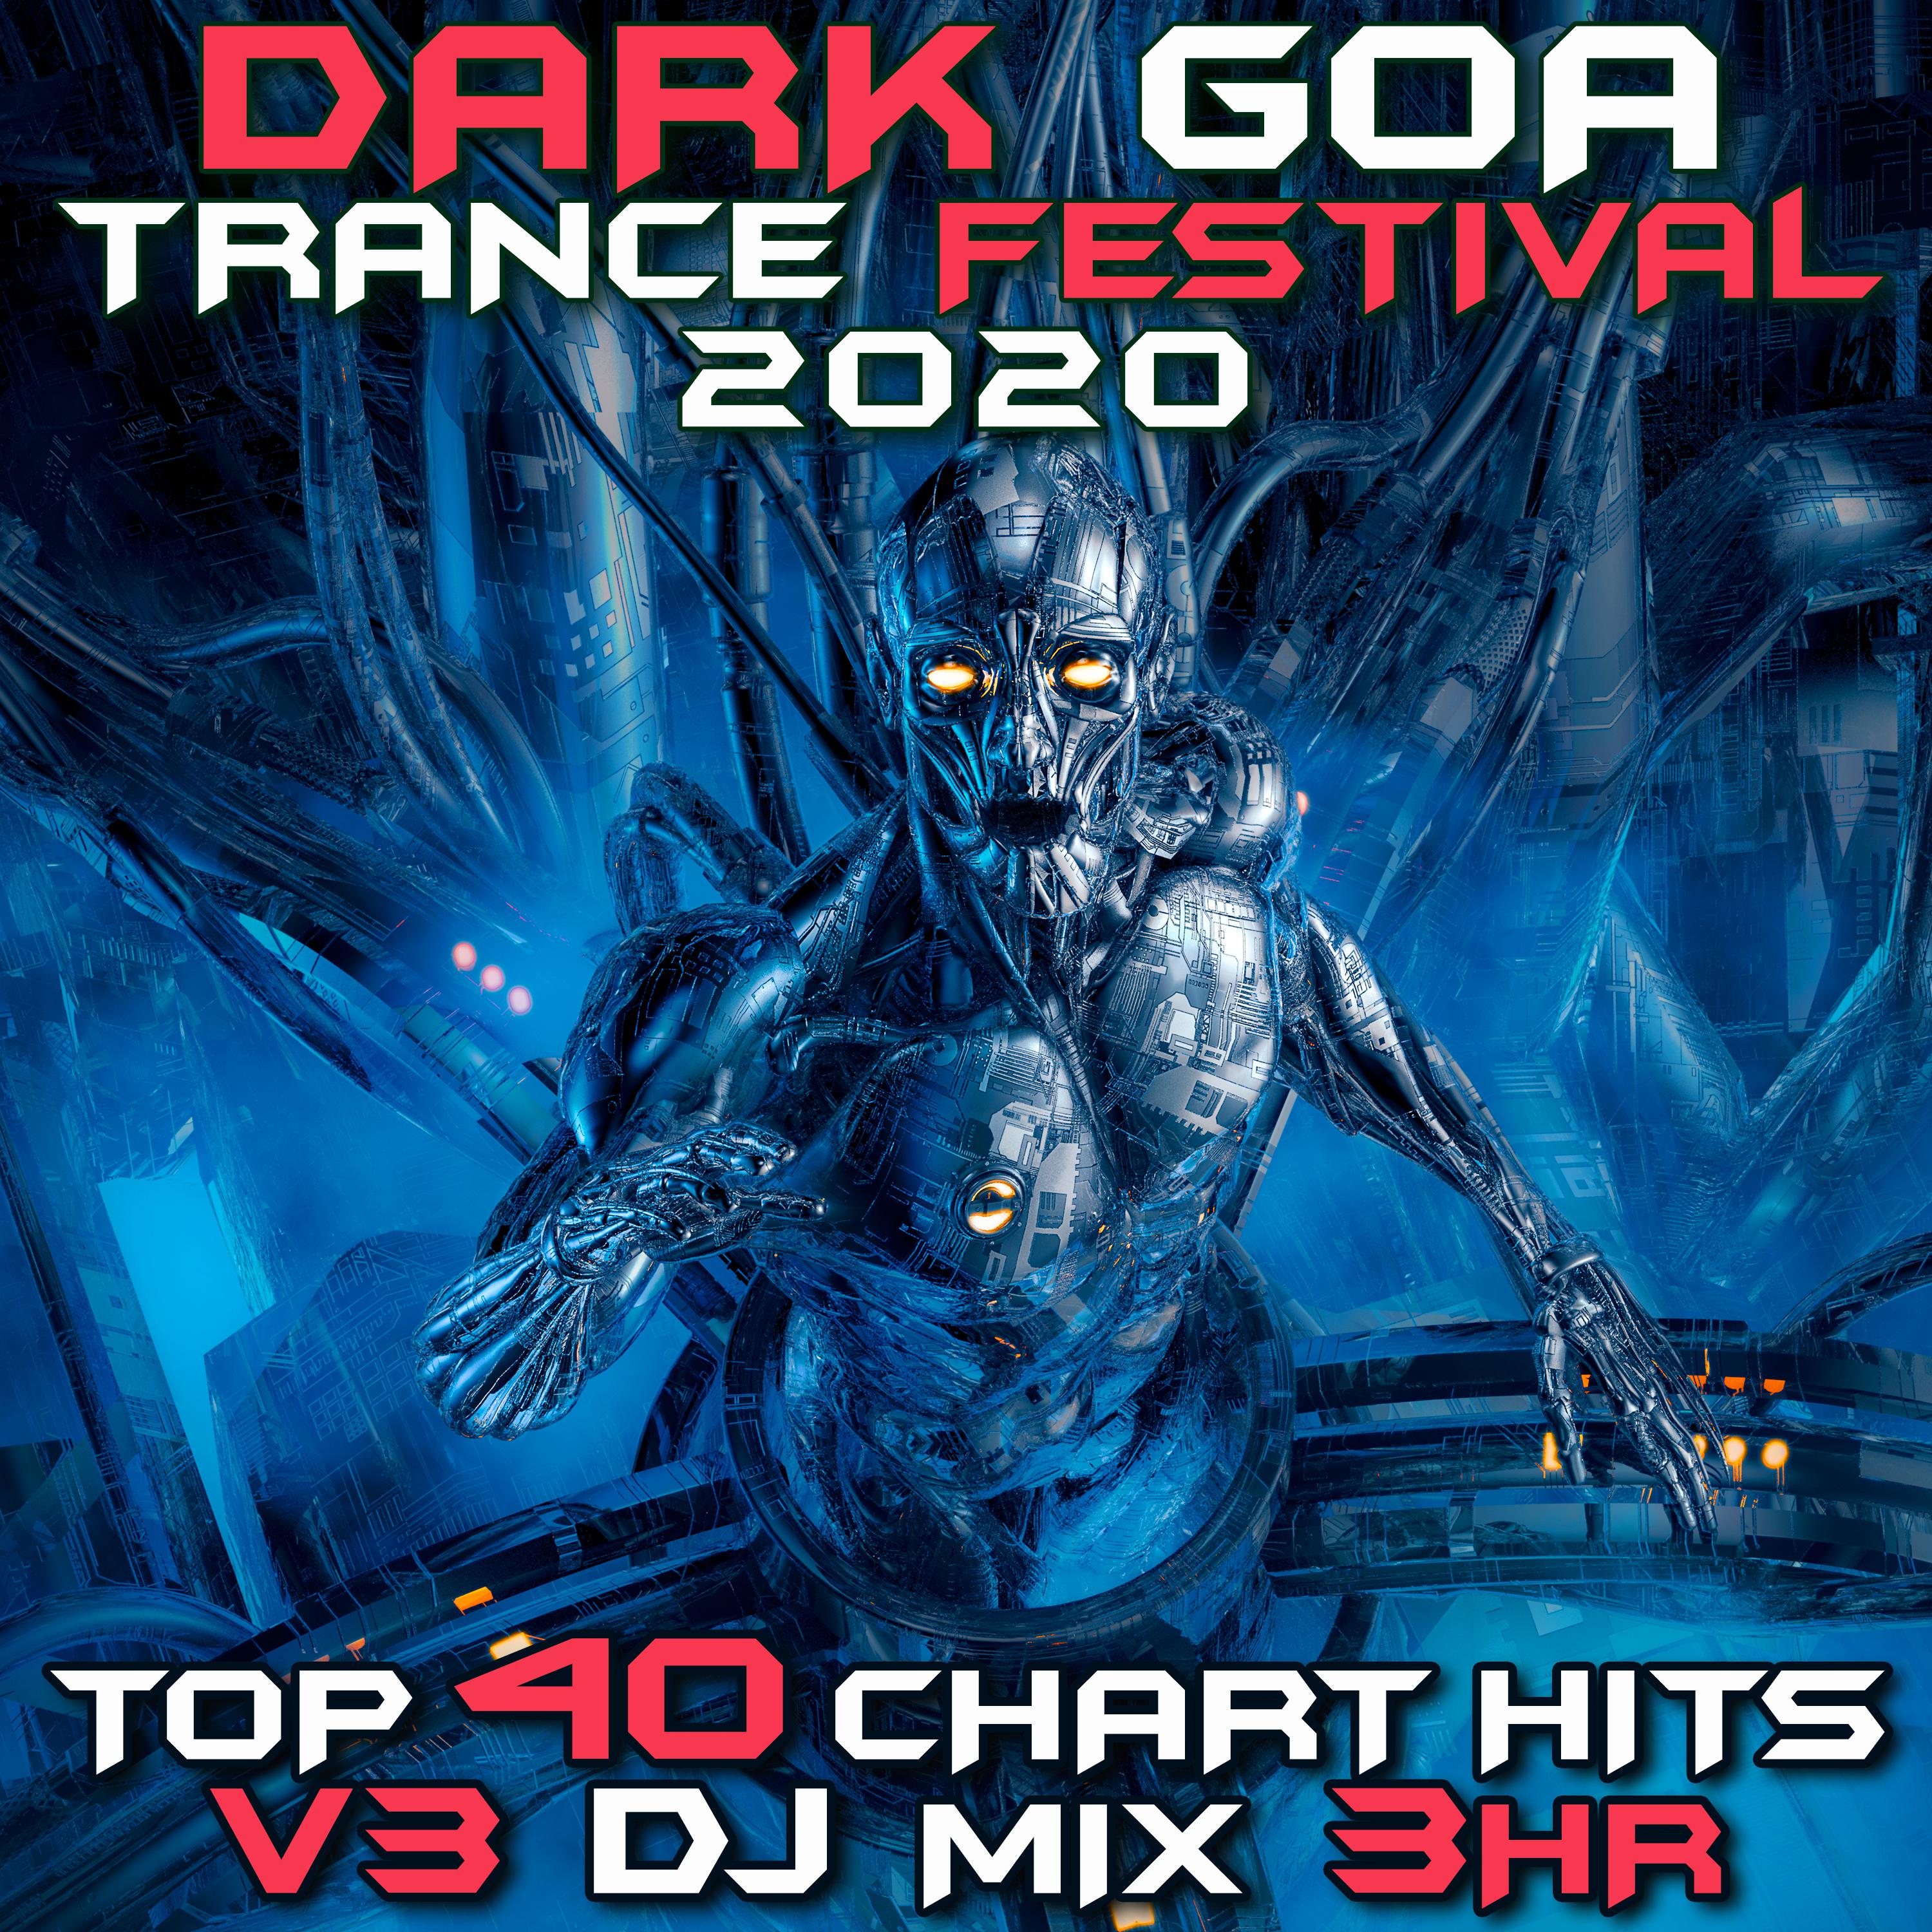 Synchrosphere - Blue Book (Dark Goa Trance Festival 2020 DJ Mixed)